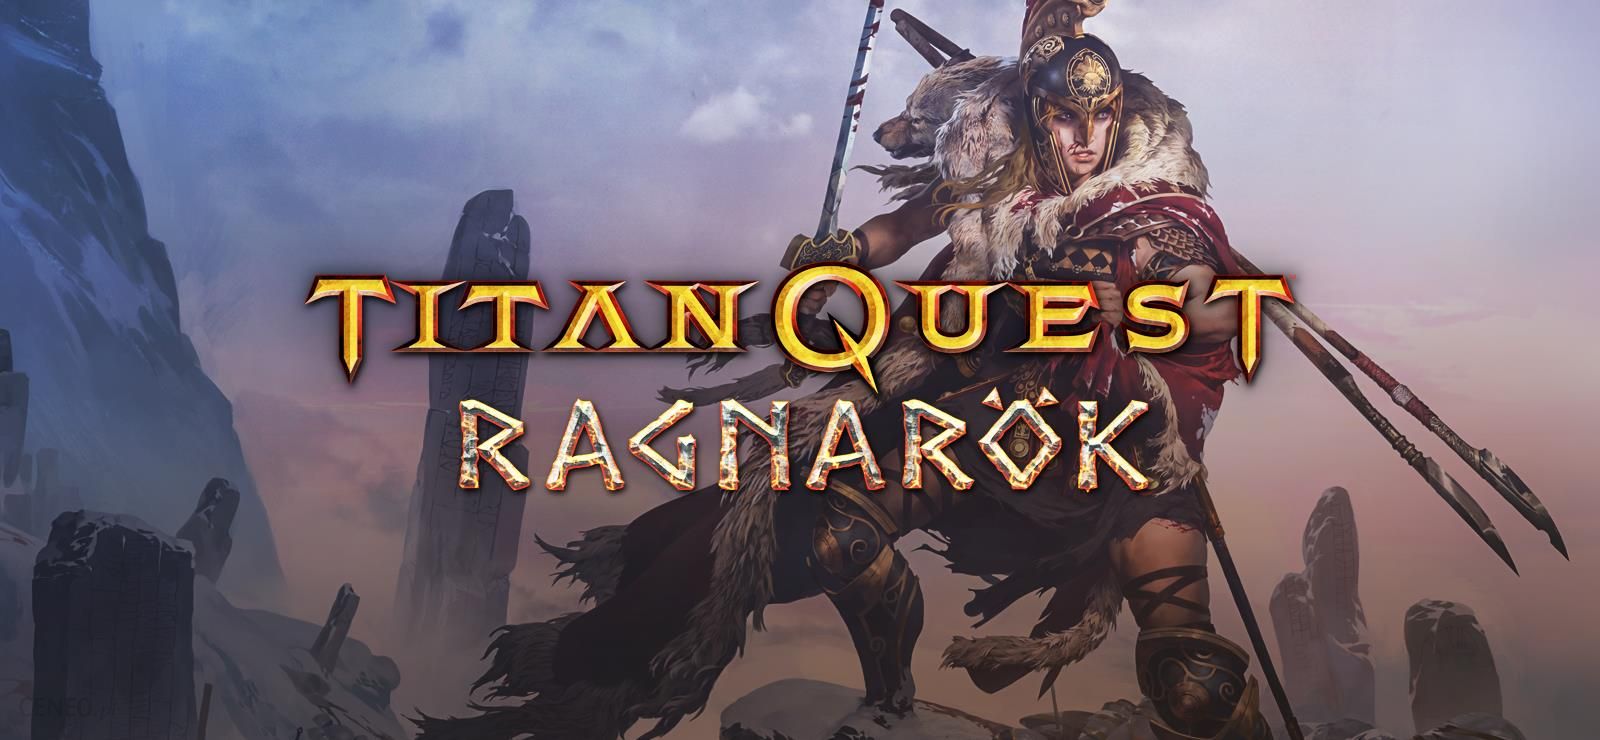 where does titan quest ragnarok keep characters